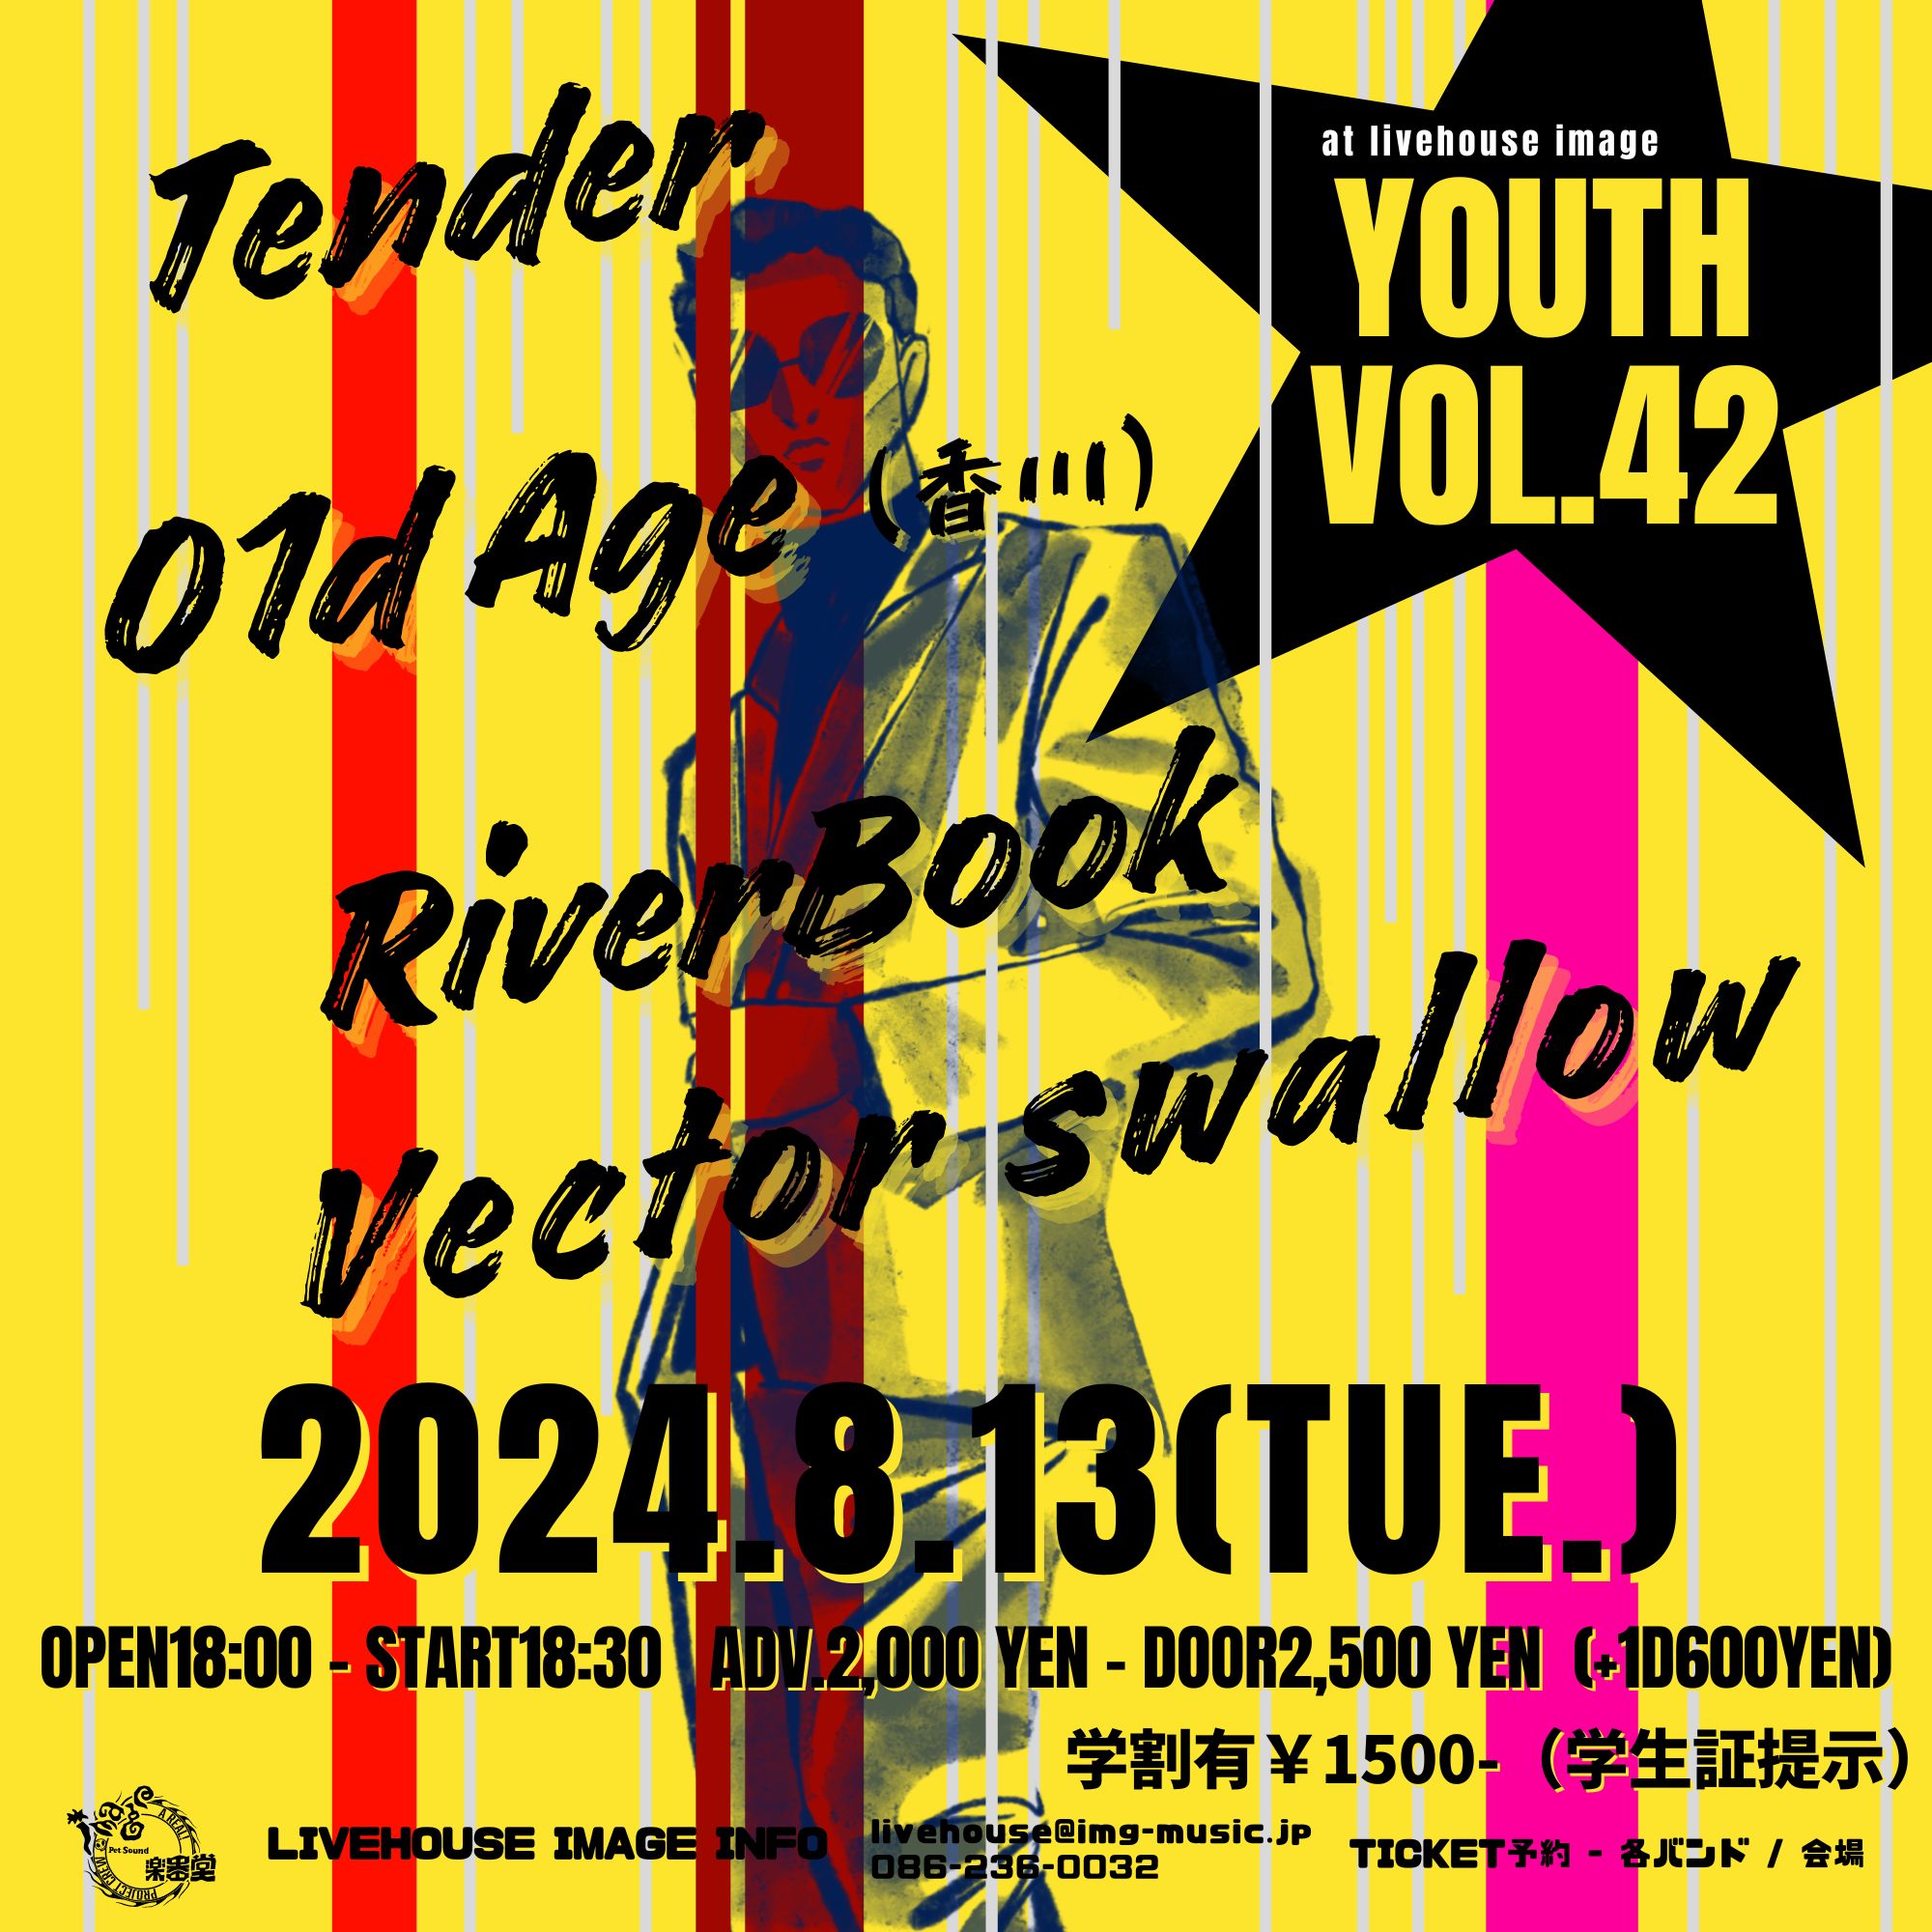 youth vol.42